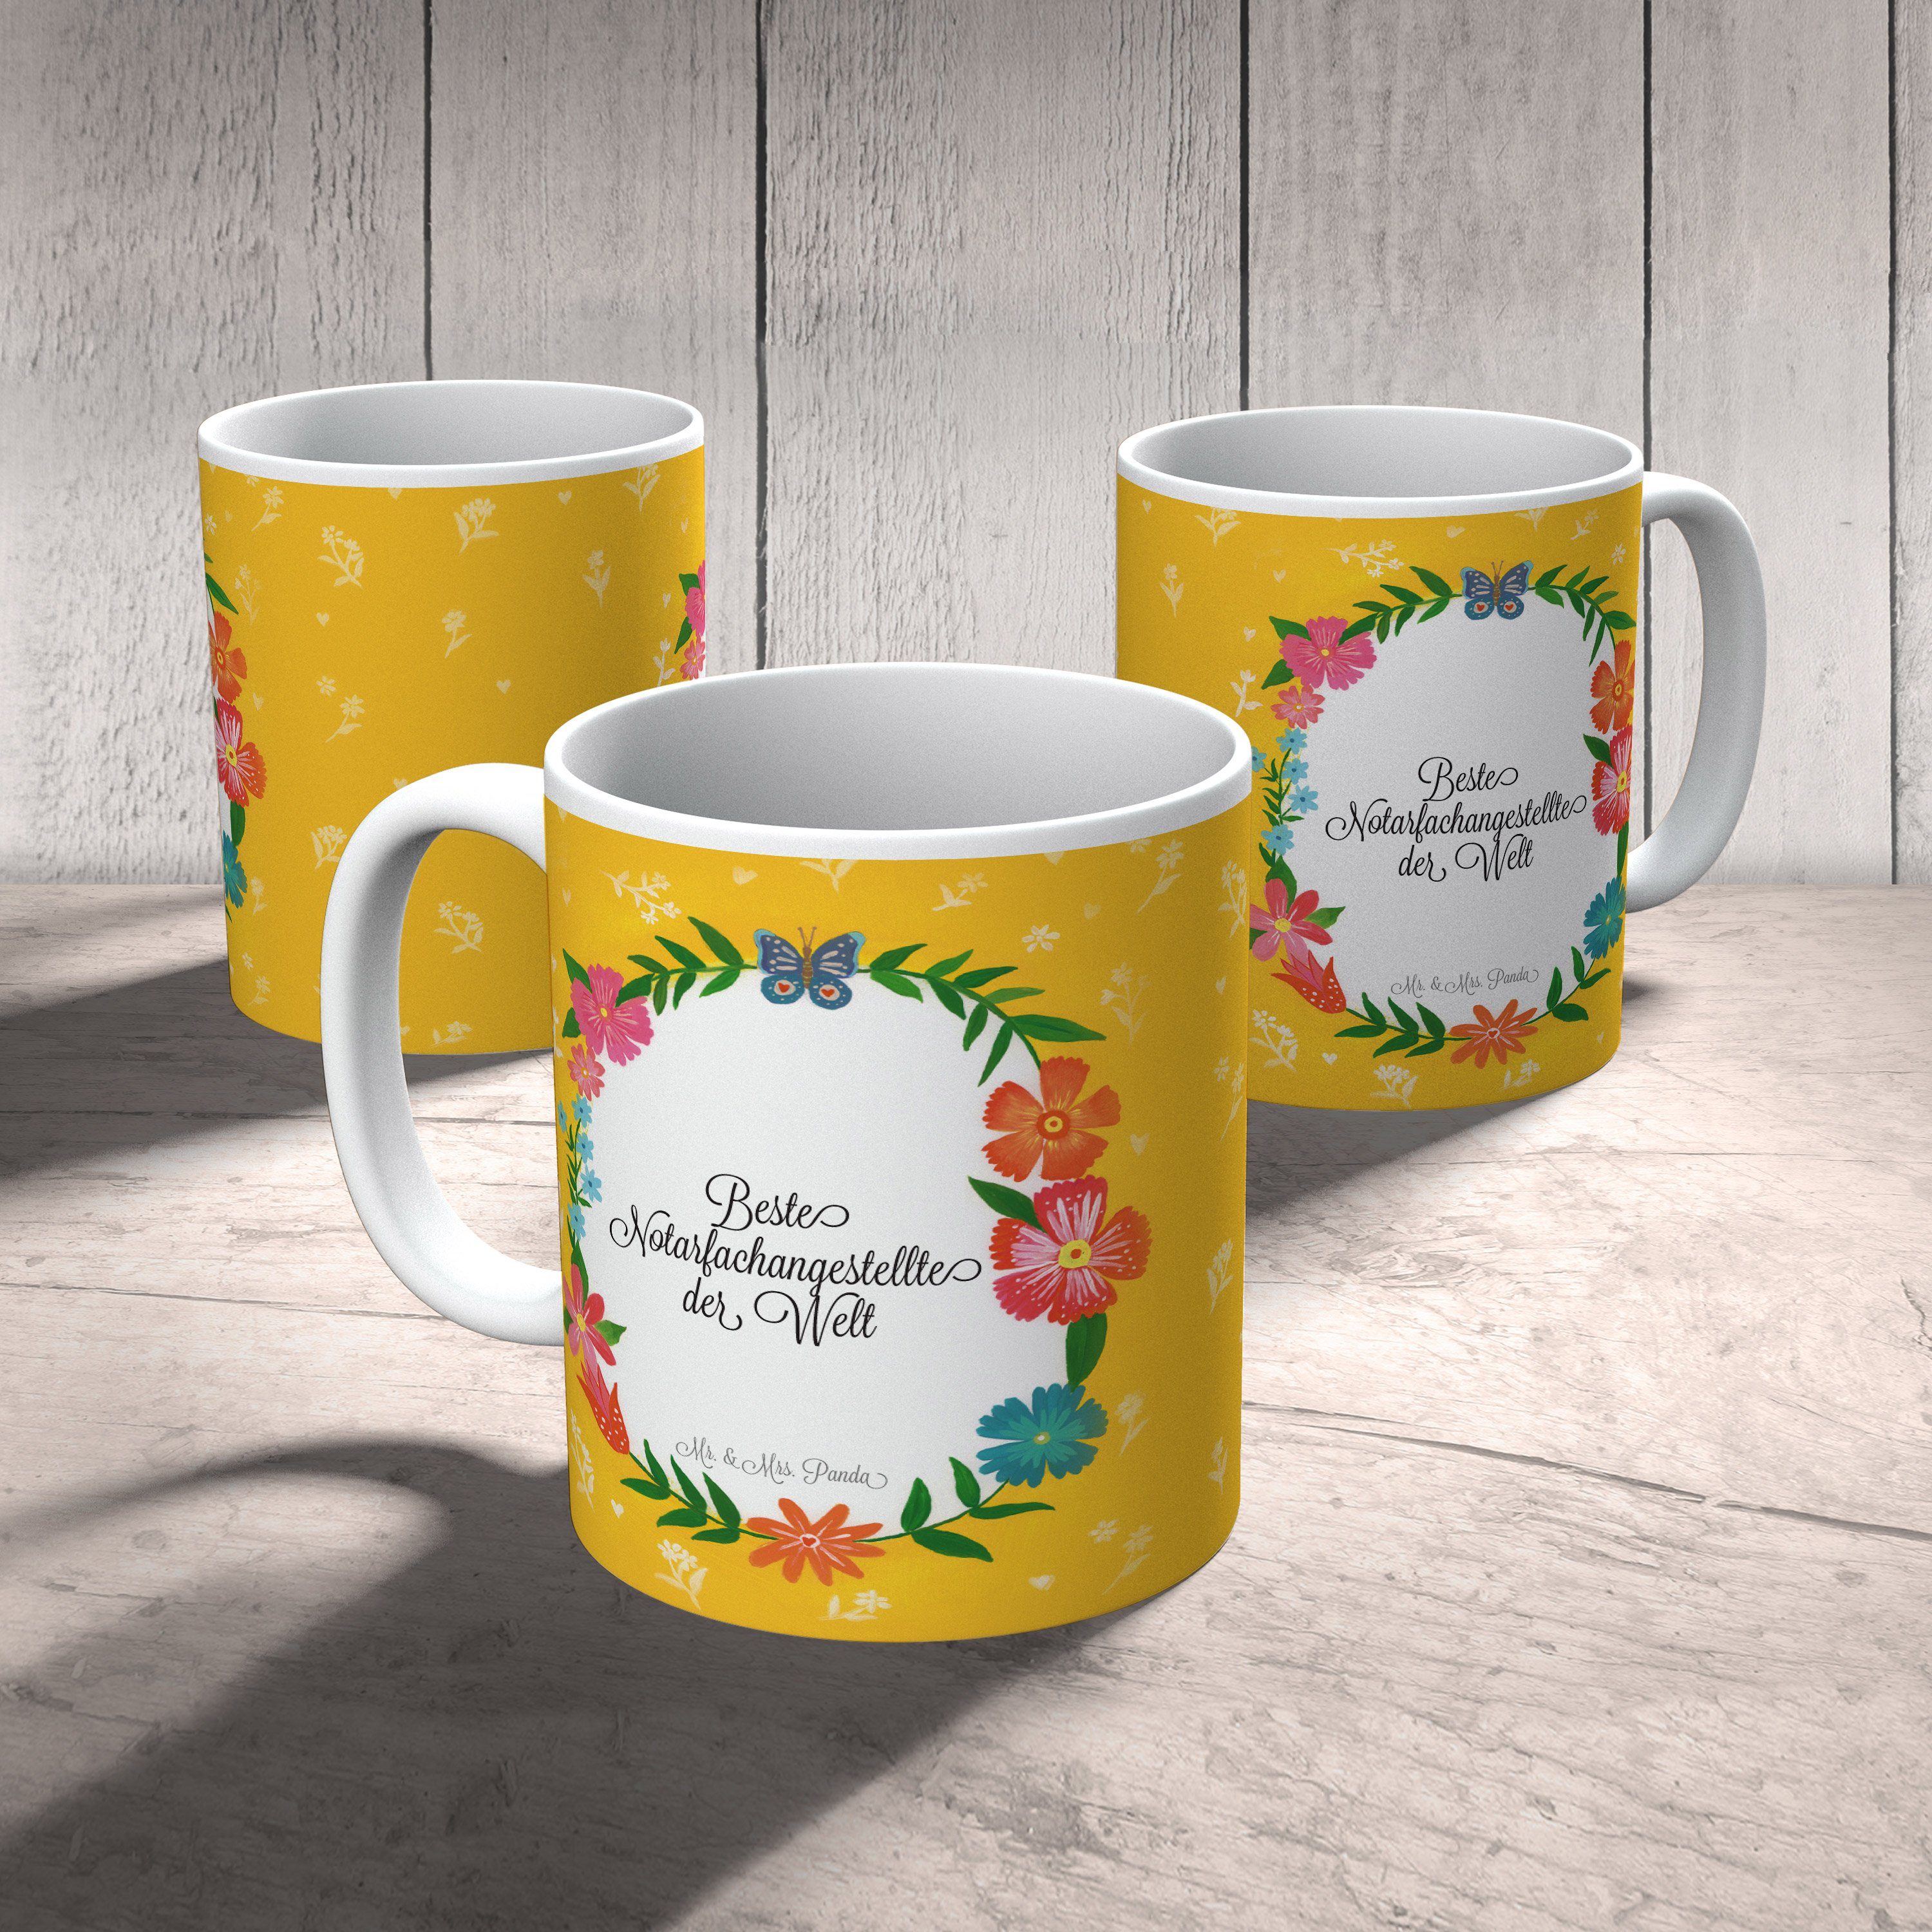 Geschenk, Panda Mr. Abschluss, - Mrs. Kaffeebecher, Gratulation, Keramik & Notarfachangestellte Tasse